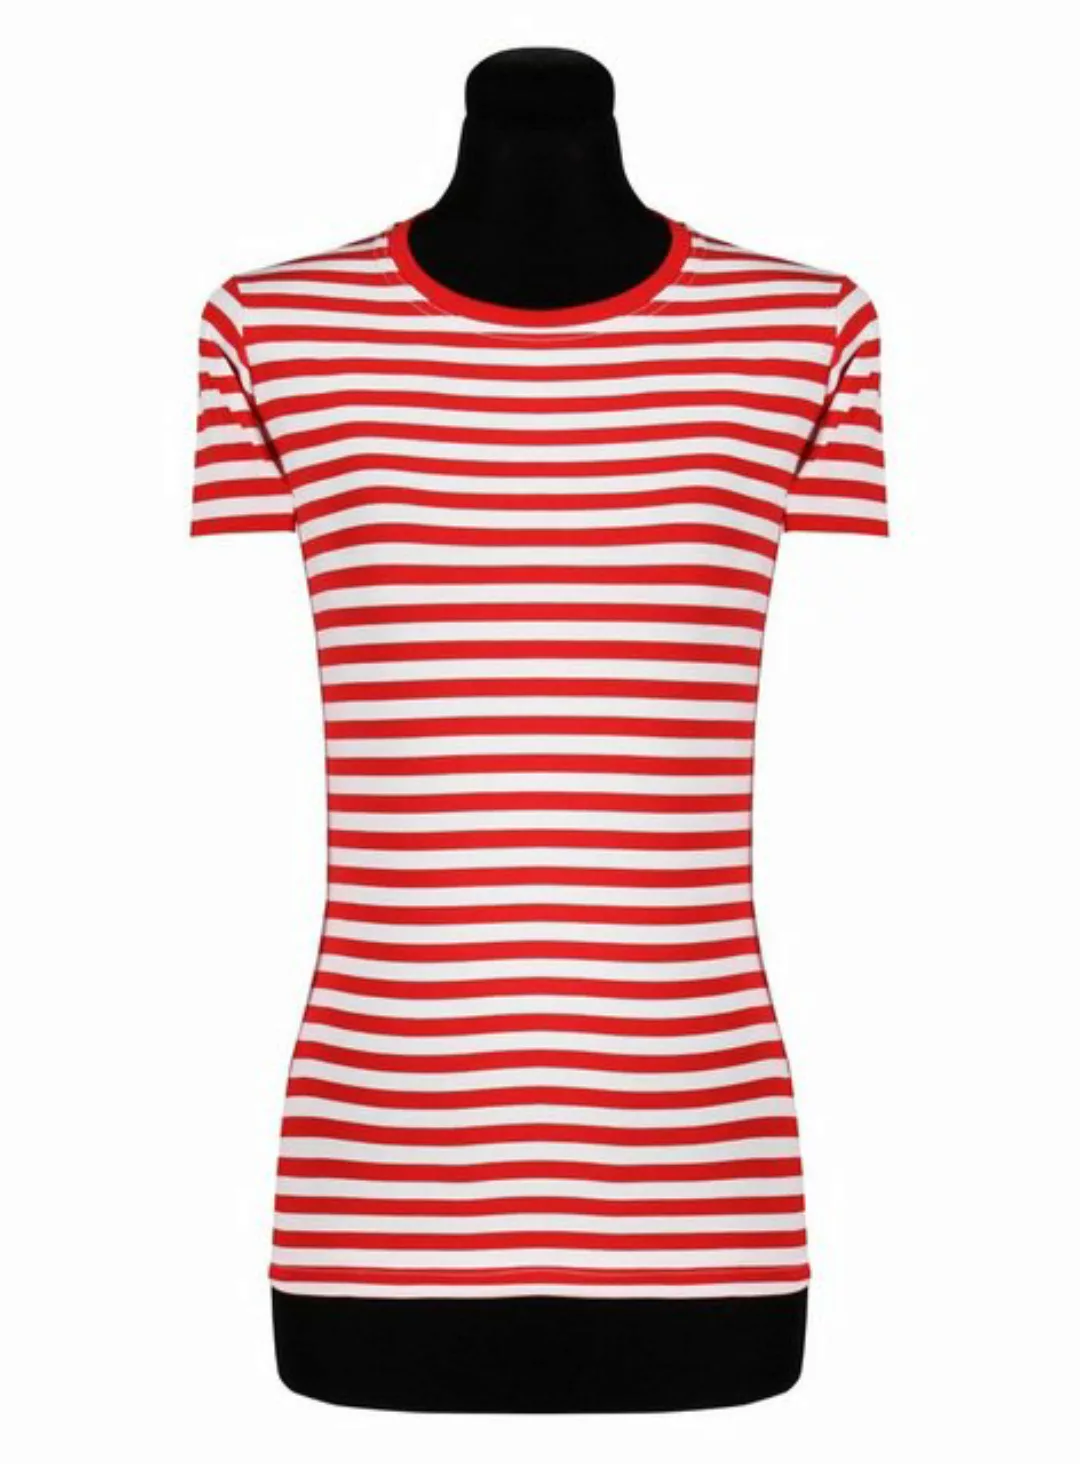 thetru T-Shirt Damen Ringelshirt kurzarm rot-weiß – alltagstaugli Gestreift günstig online kaufen